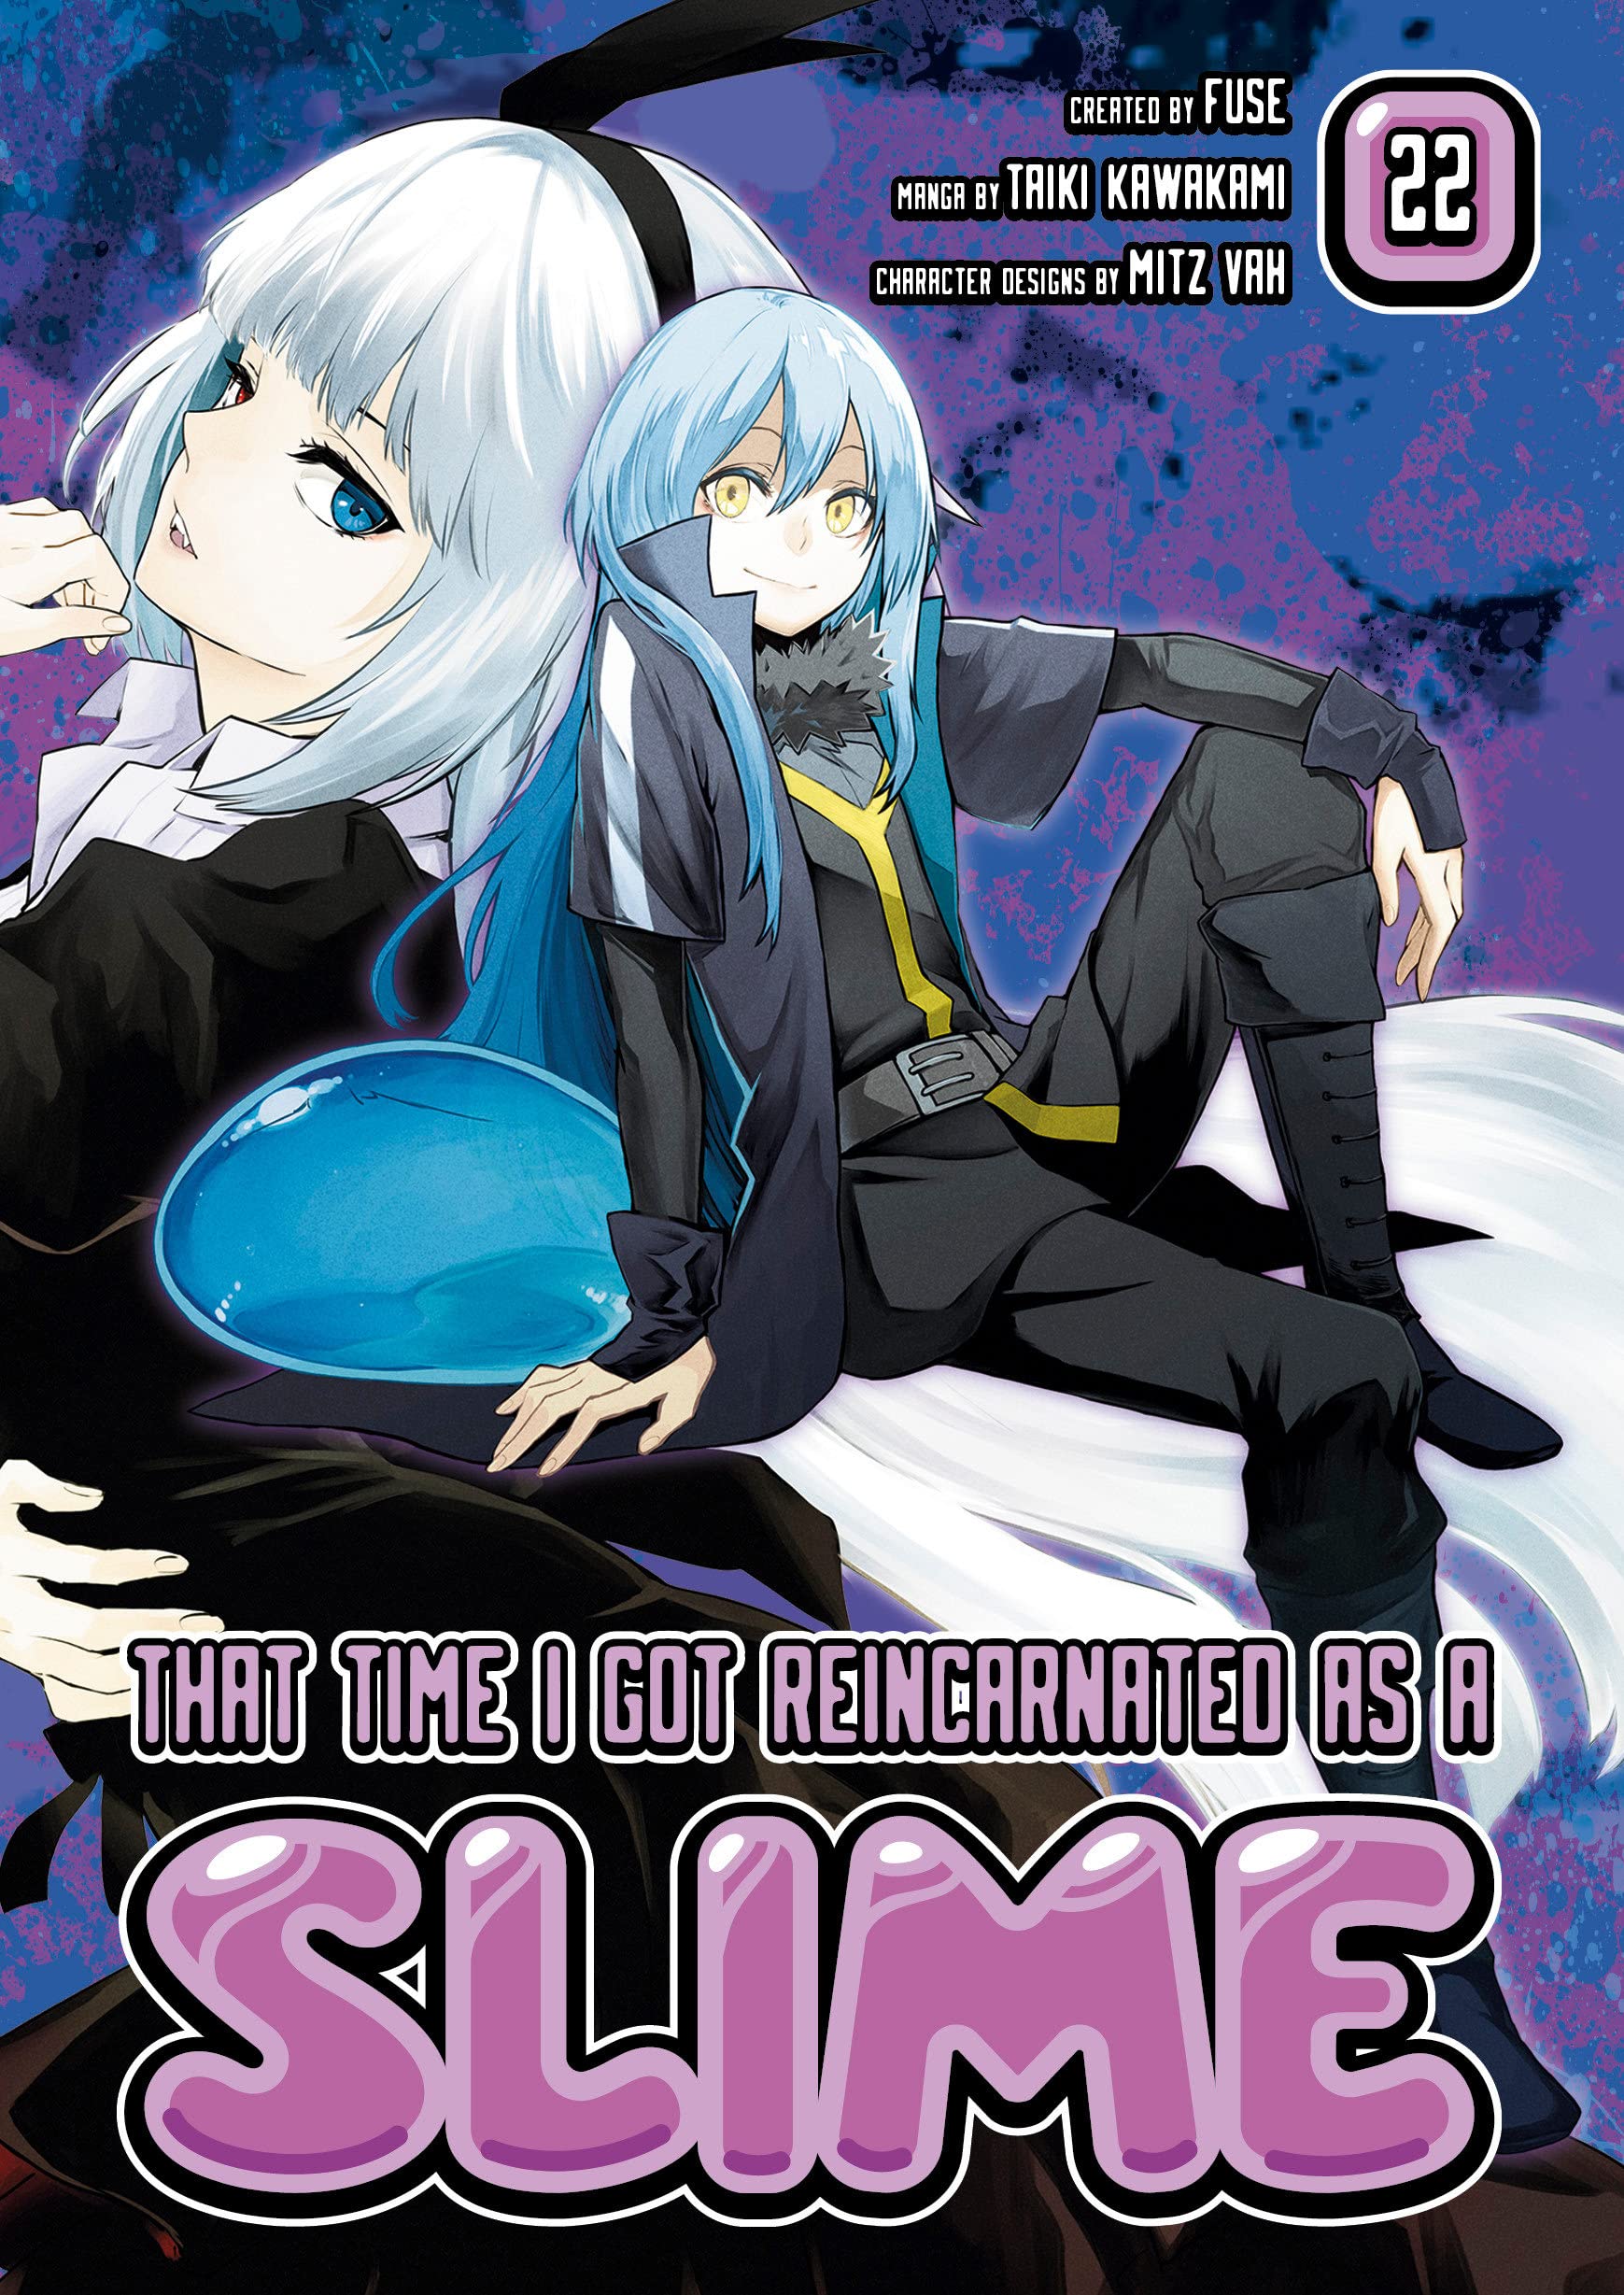 ART] Tensei Shitara Slime Datta Ken Volume 22 Covers : r/manga